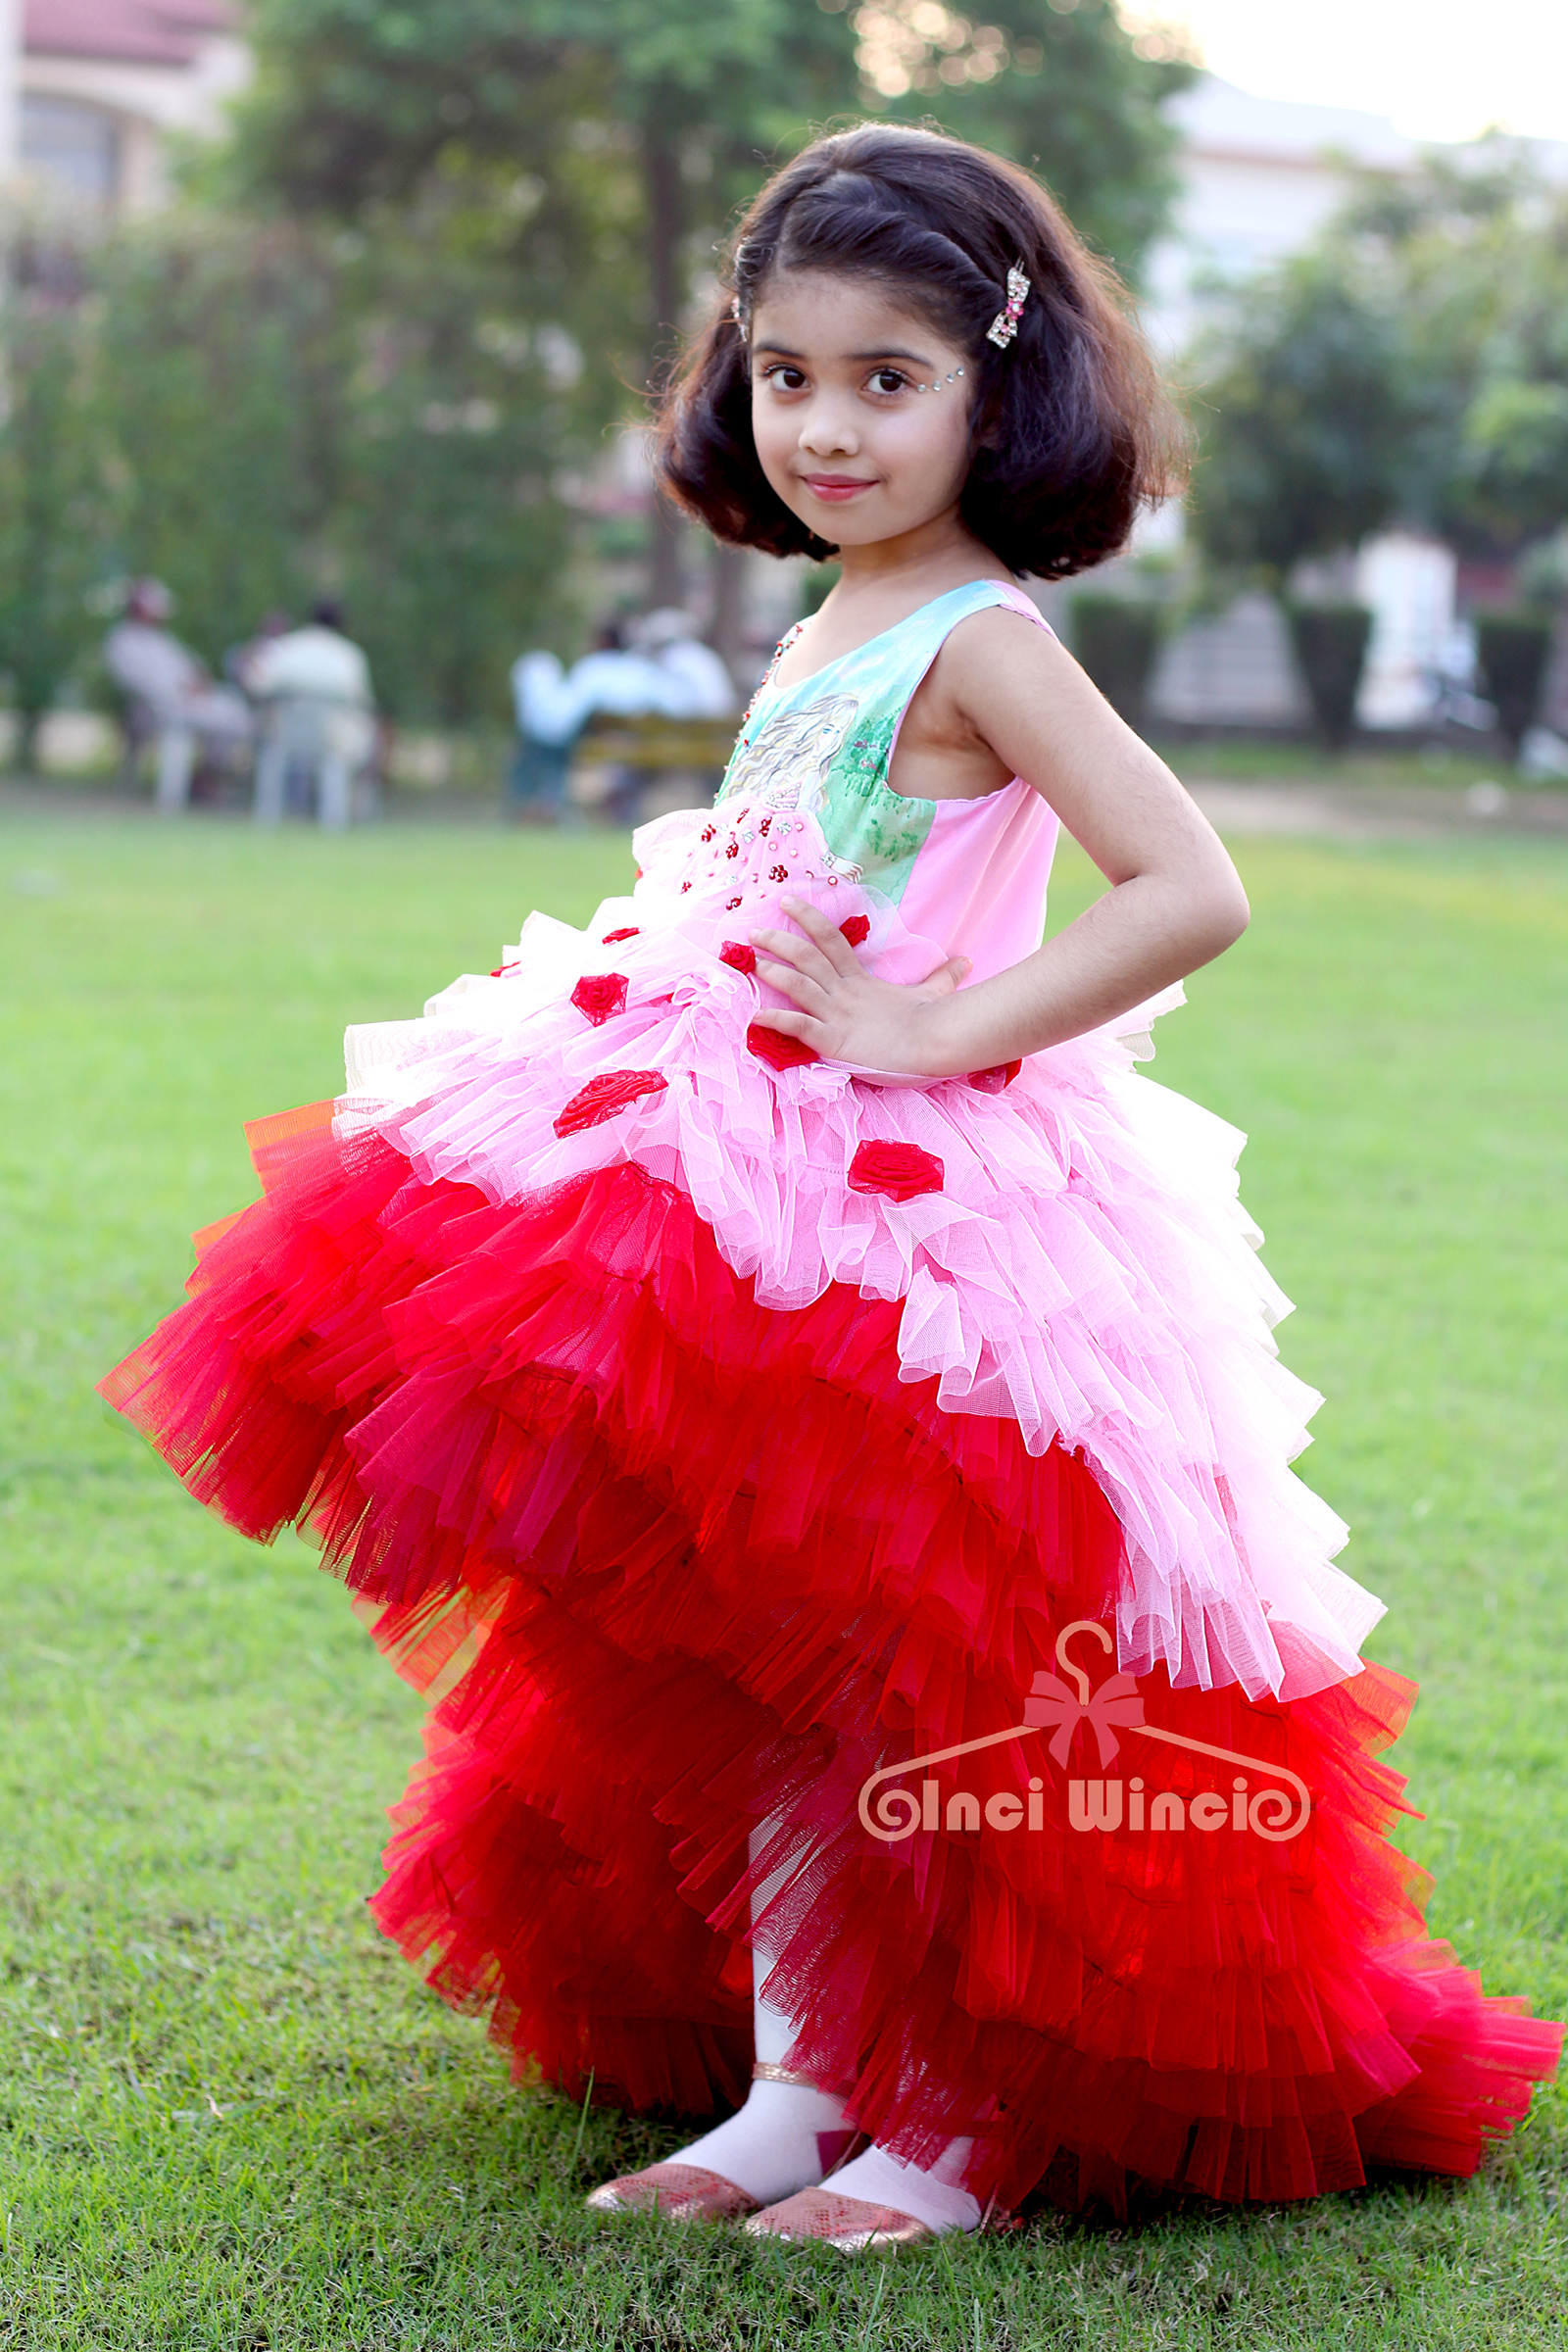 net frock designs for kids princess| Alibaba.com-thanhphatduhoc.com.vn